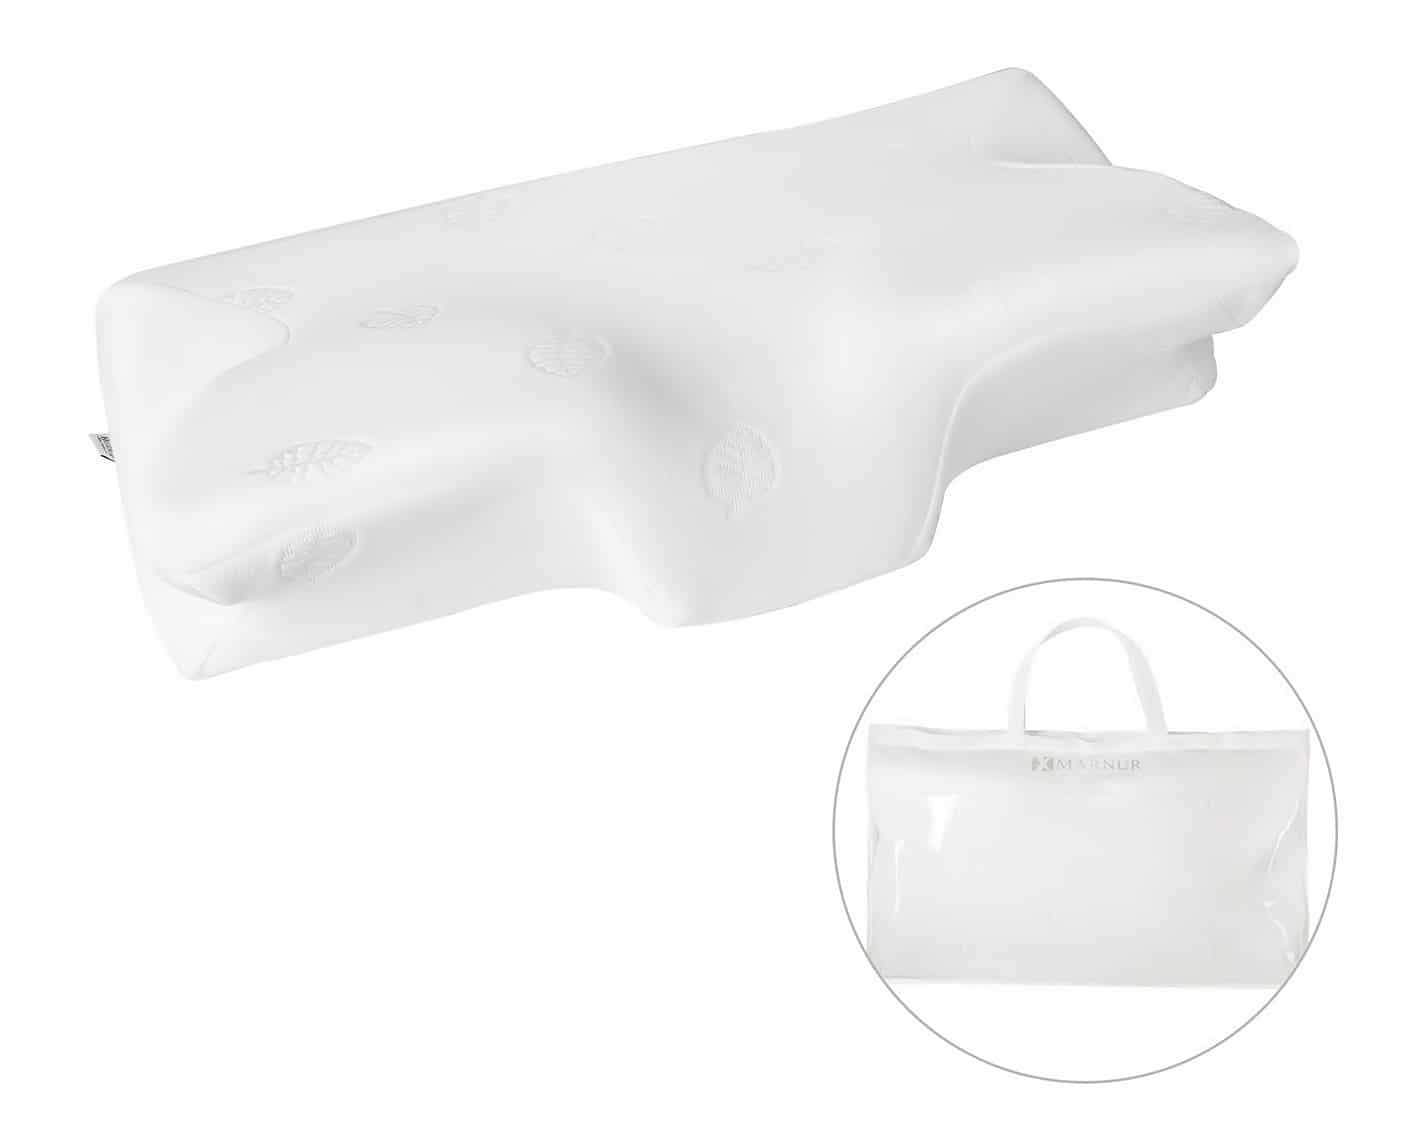 Marnur Contour Memory Foam Orthopedic Pillow for Neck Pain